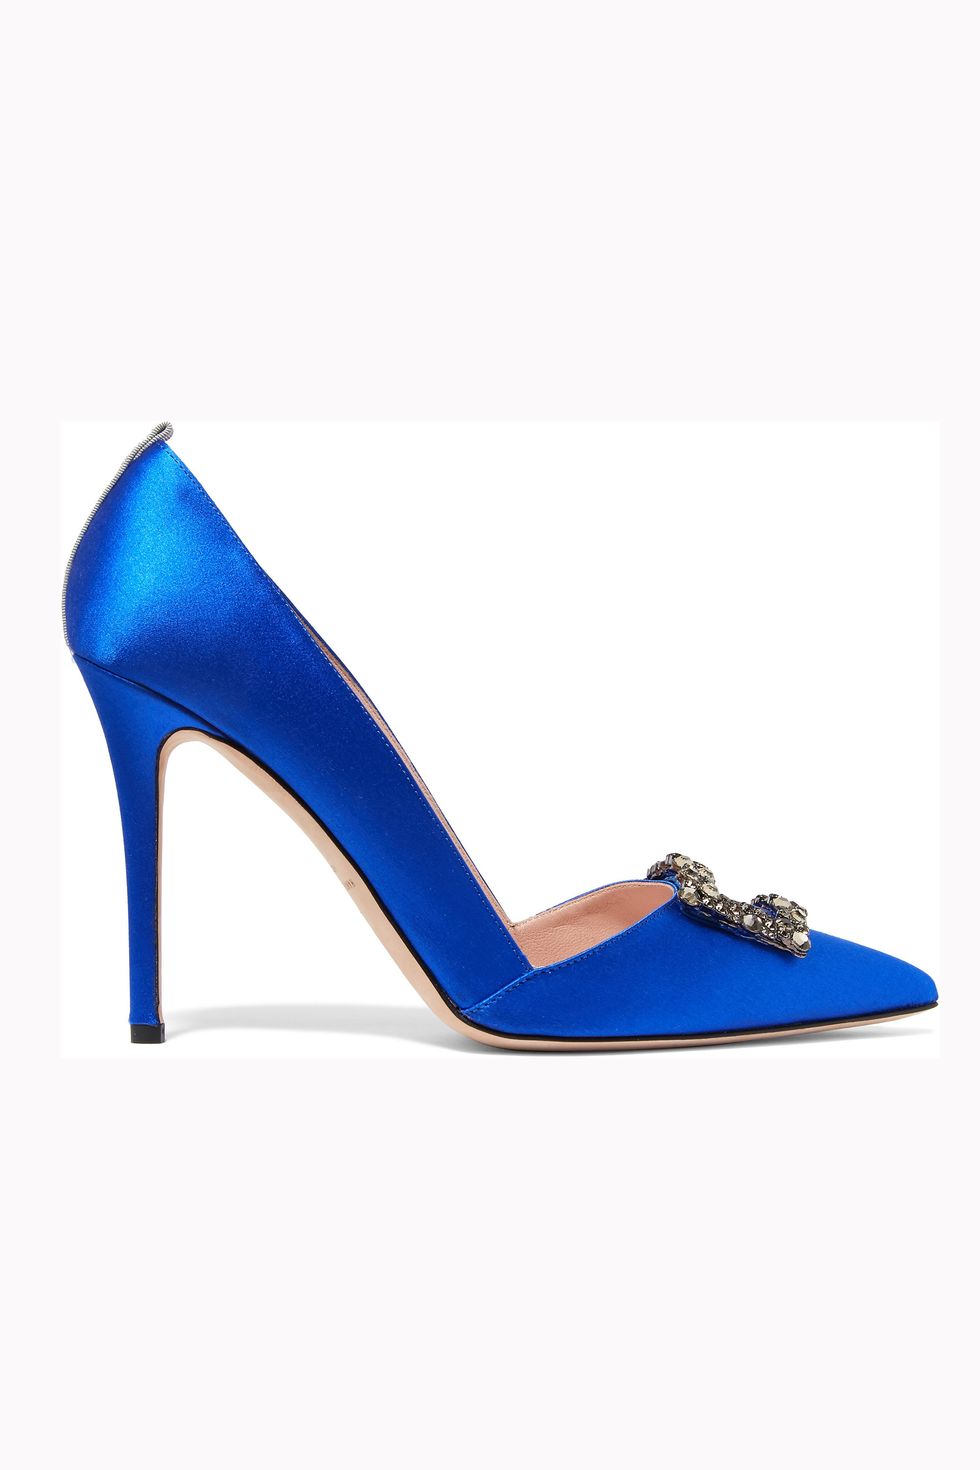 Footwear, Blue, High heels, Electric blue, Basic pump, Fashion, Azure, Tan, Aqua, Sandal, 